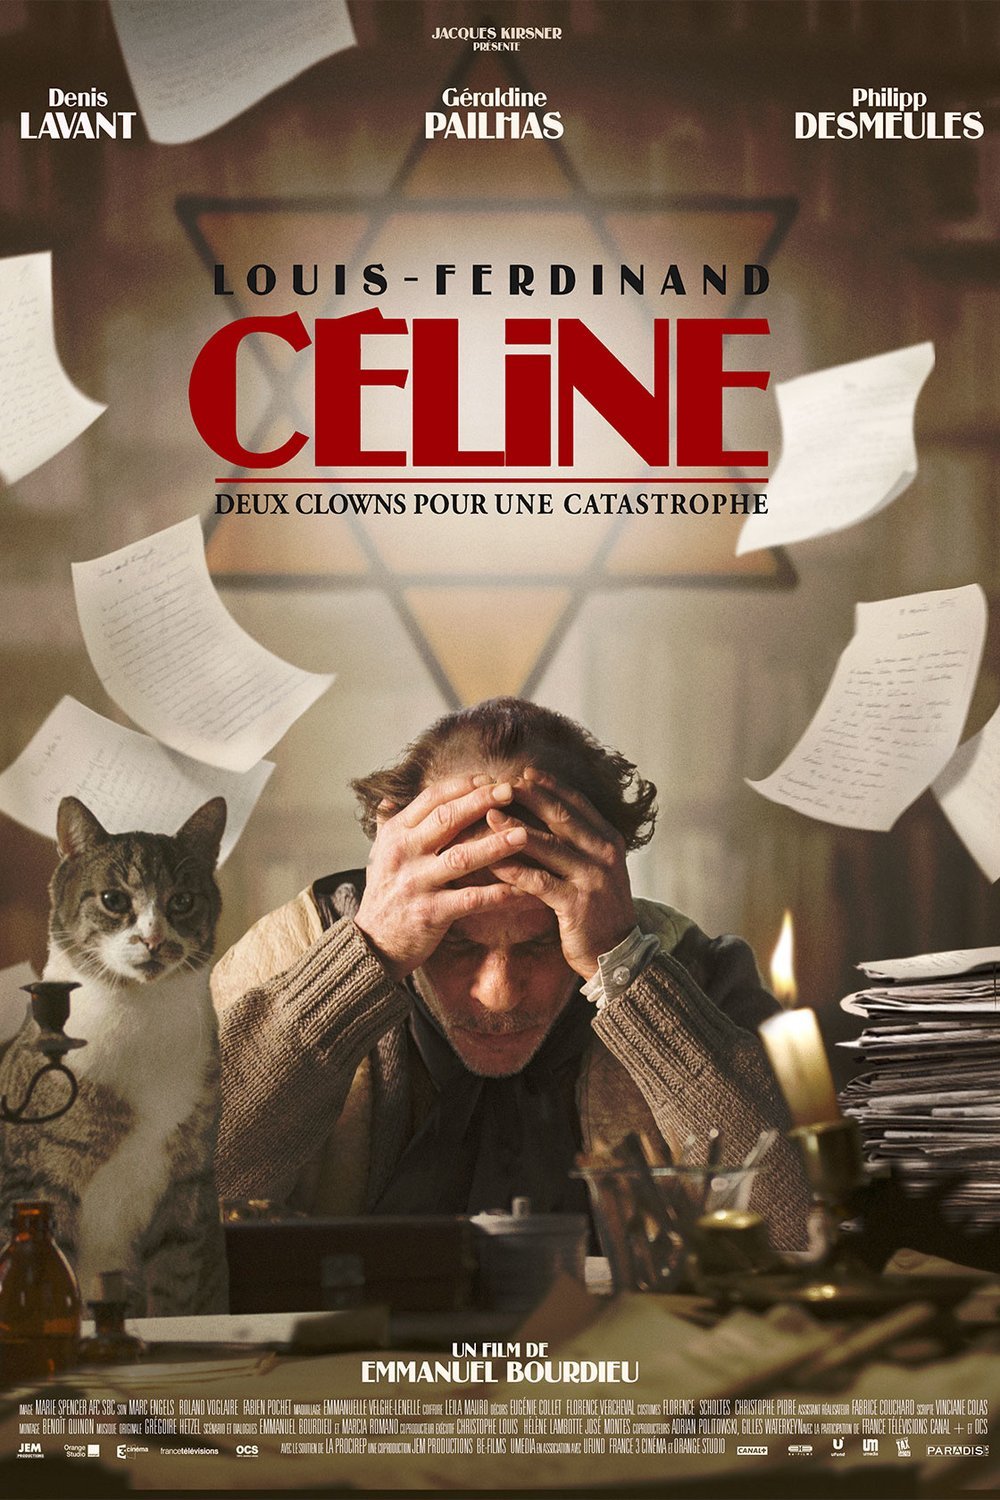 Poster of the movie Louis-Ferdinand Céline